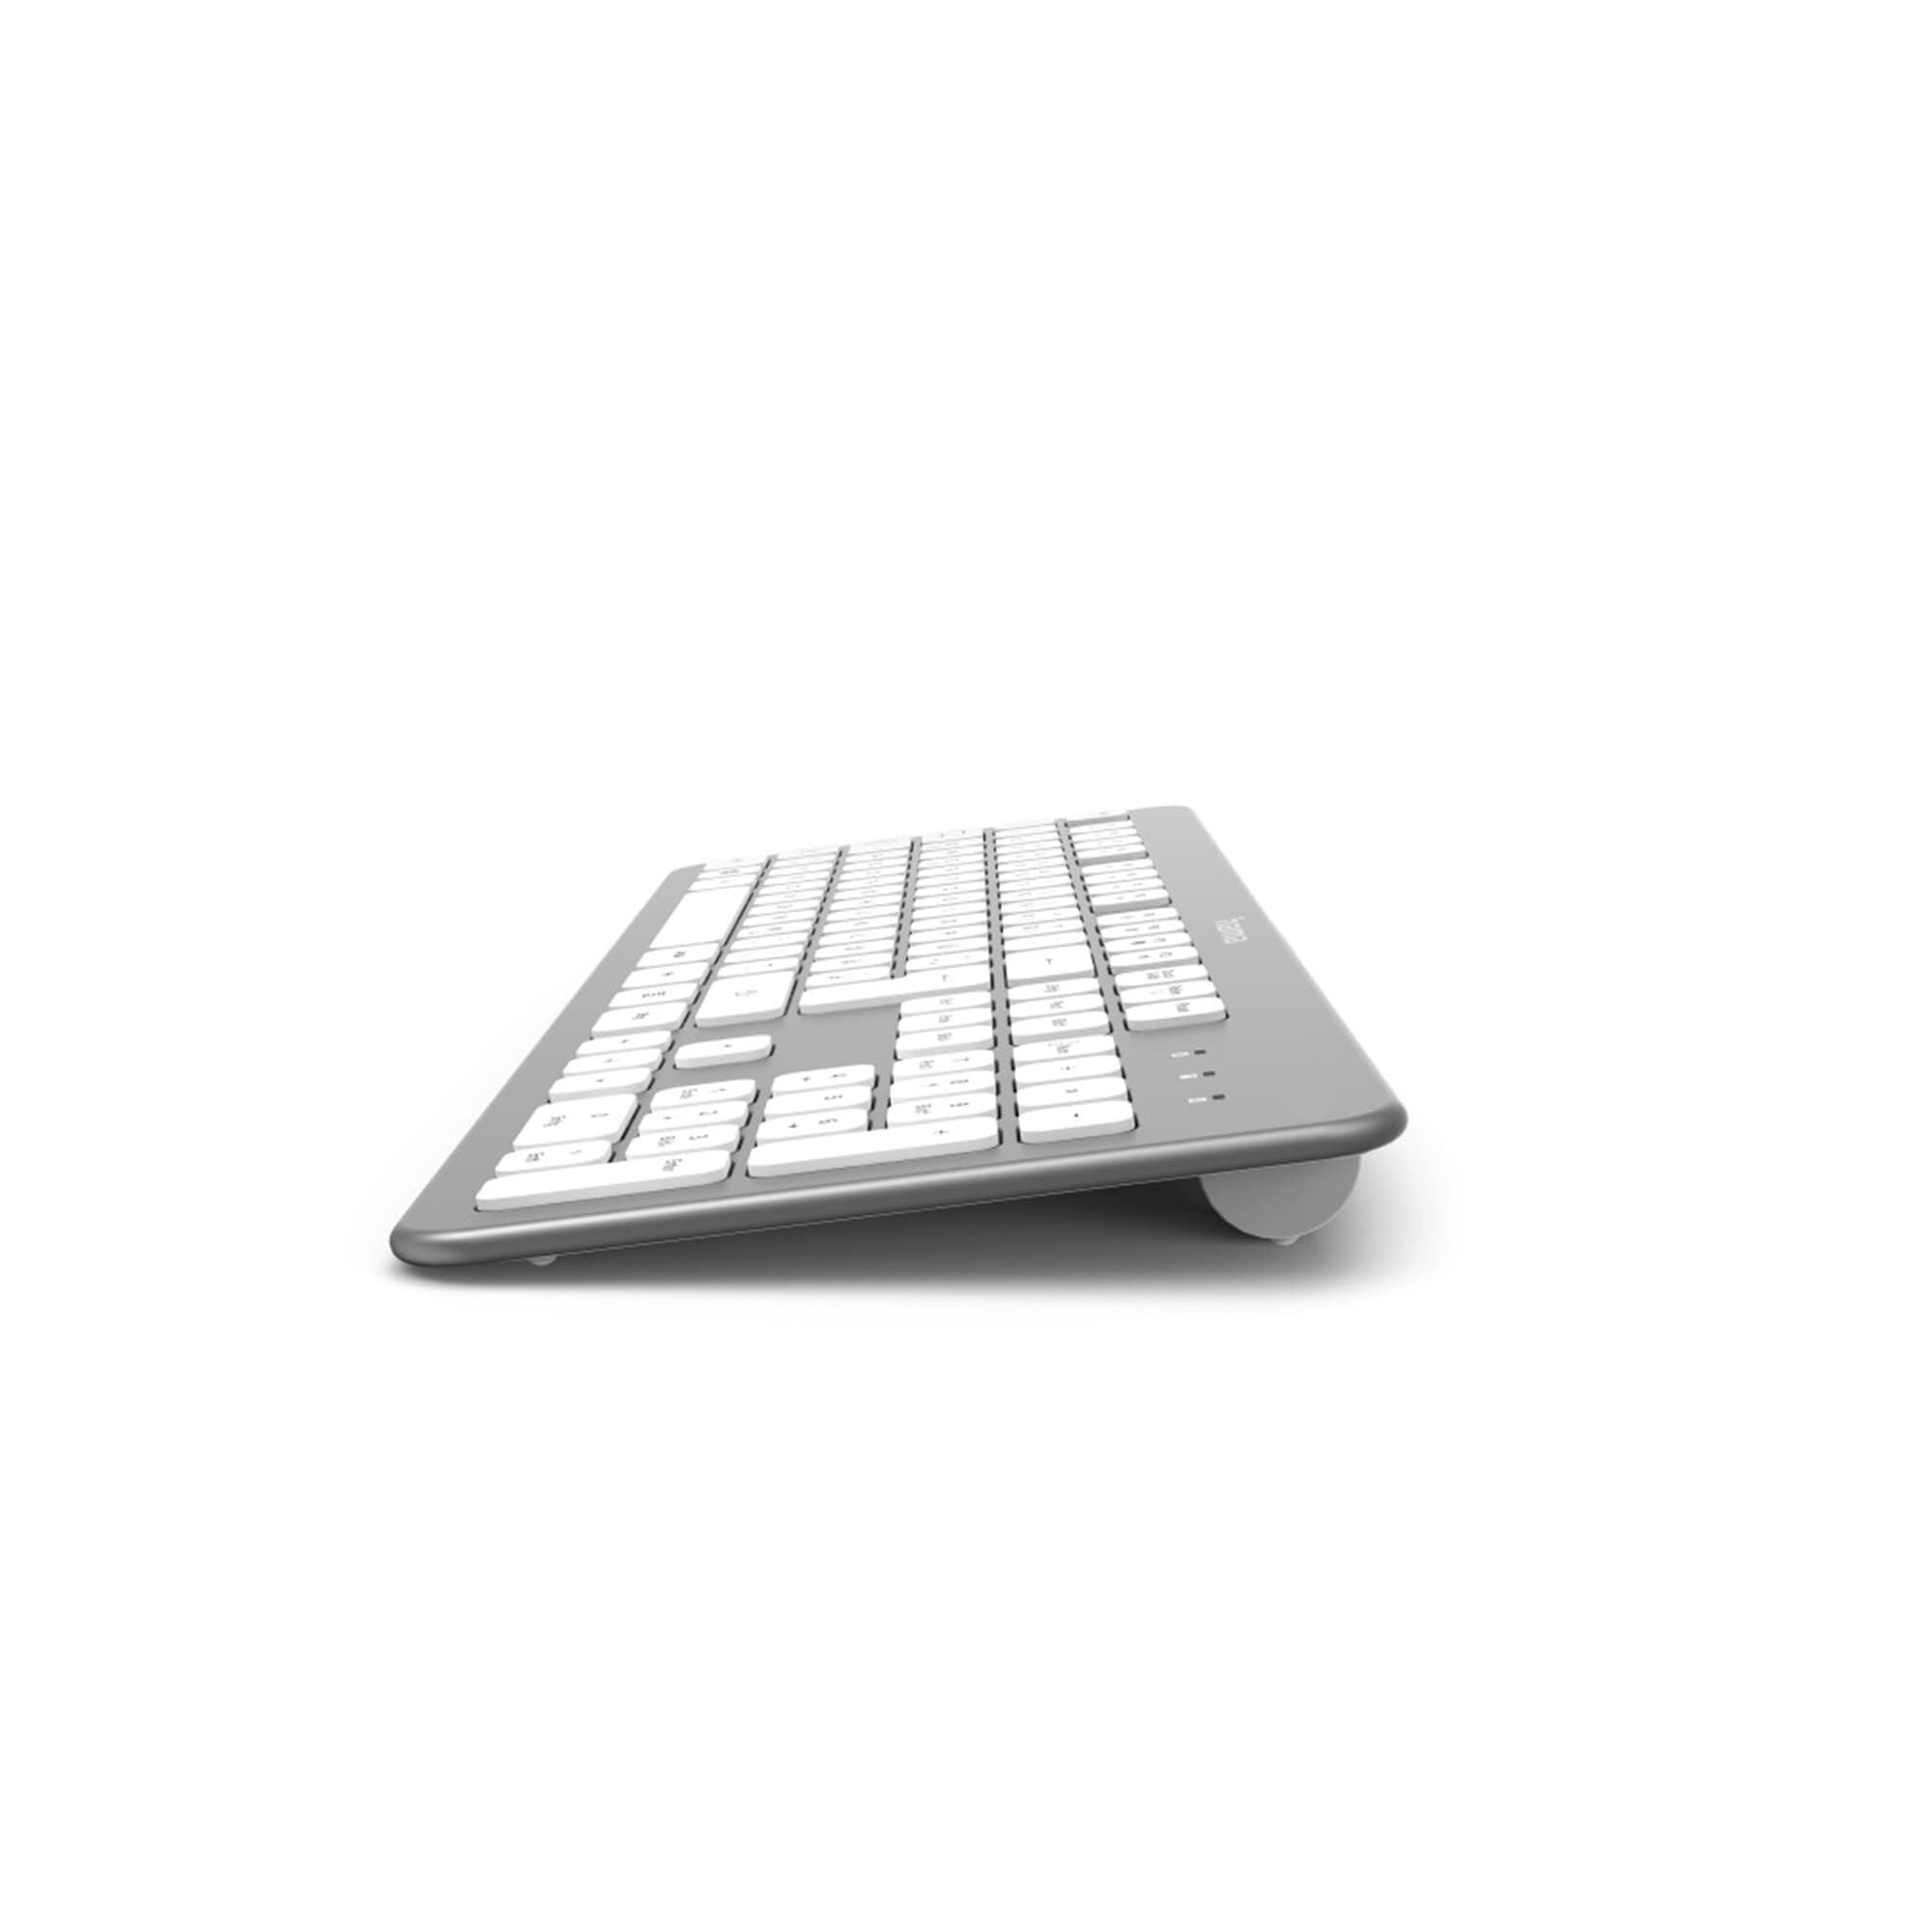 Rubberdome KW-700, HAMA Tastatur,